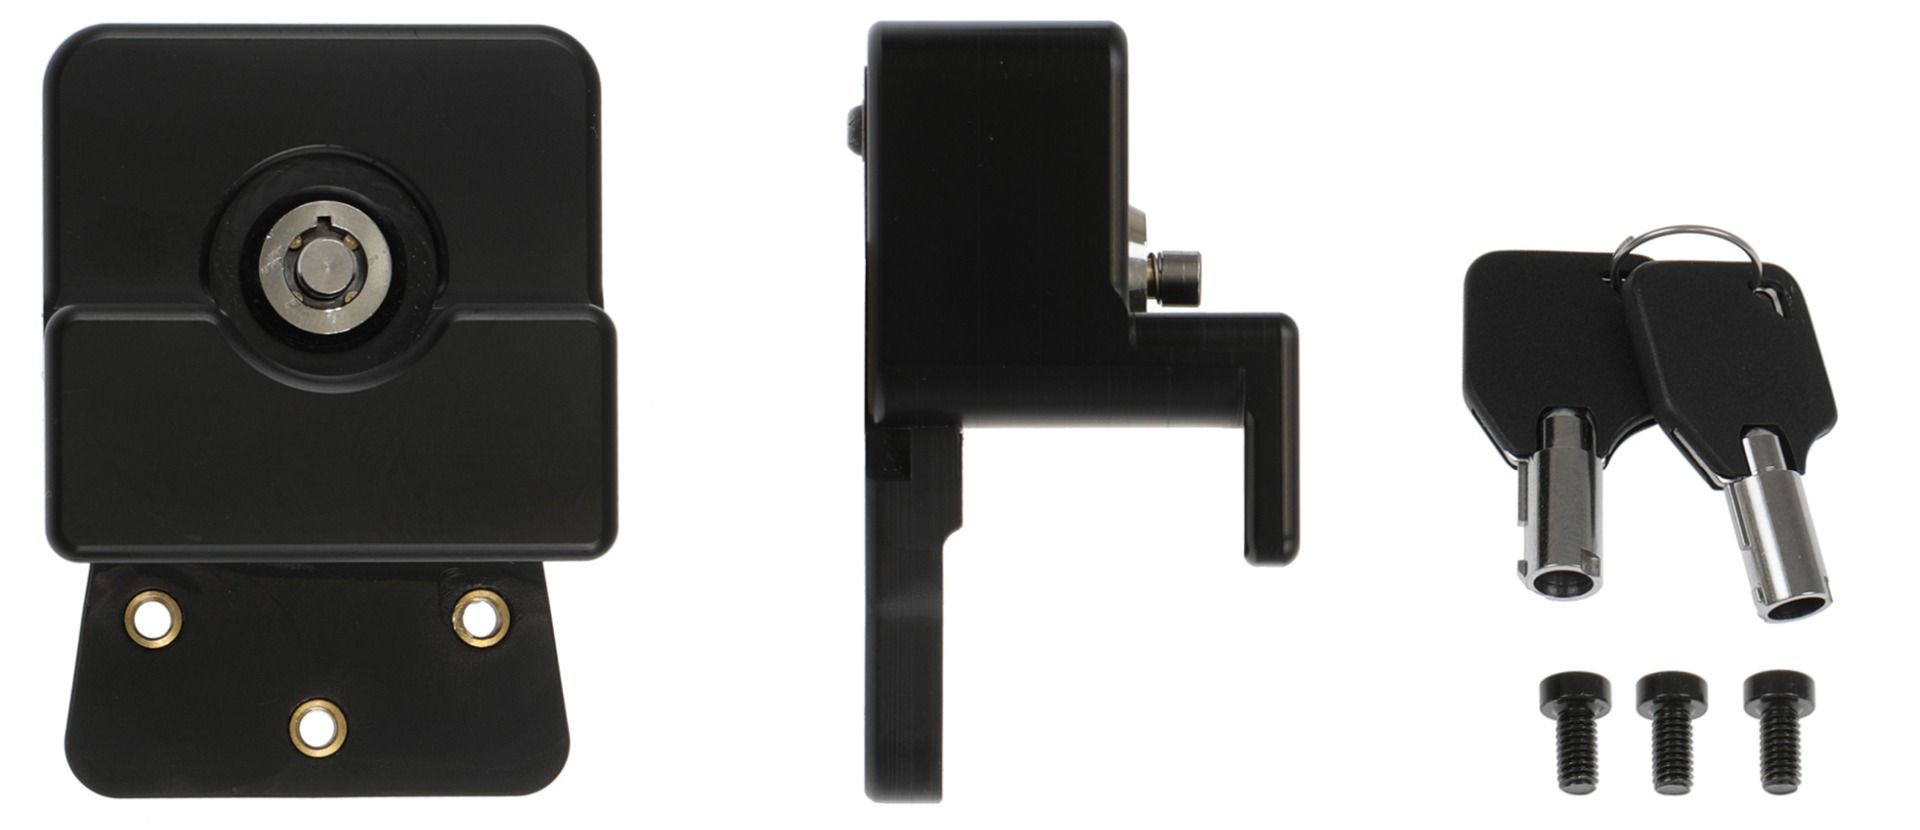 Brodit MUC keylock module for Zebra ET40/ ET45 10 inch